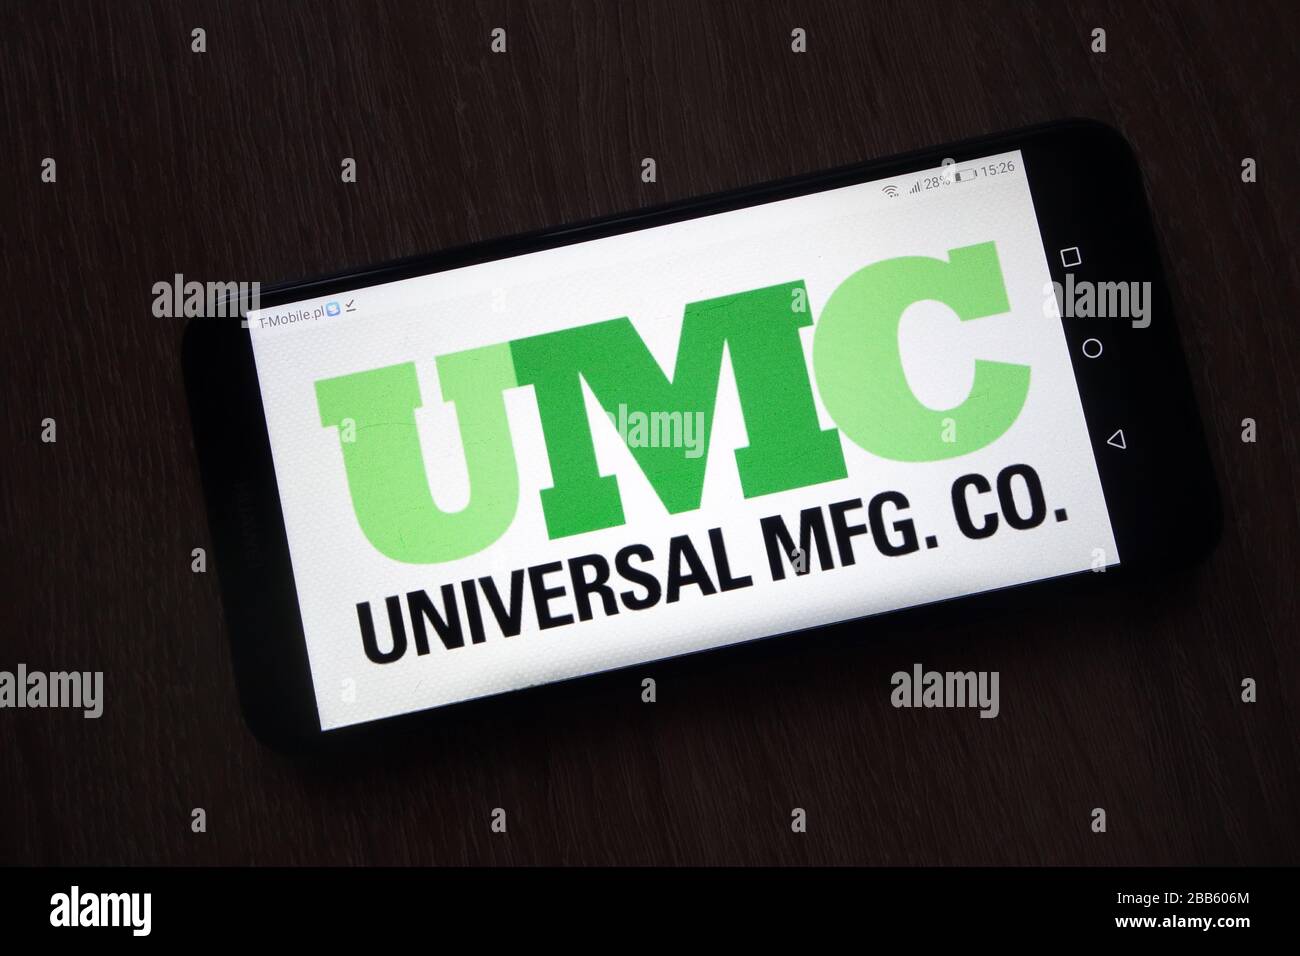 Universal Mfg. Co. (UMC) logo displayed on smartphone Stock Photo